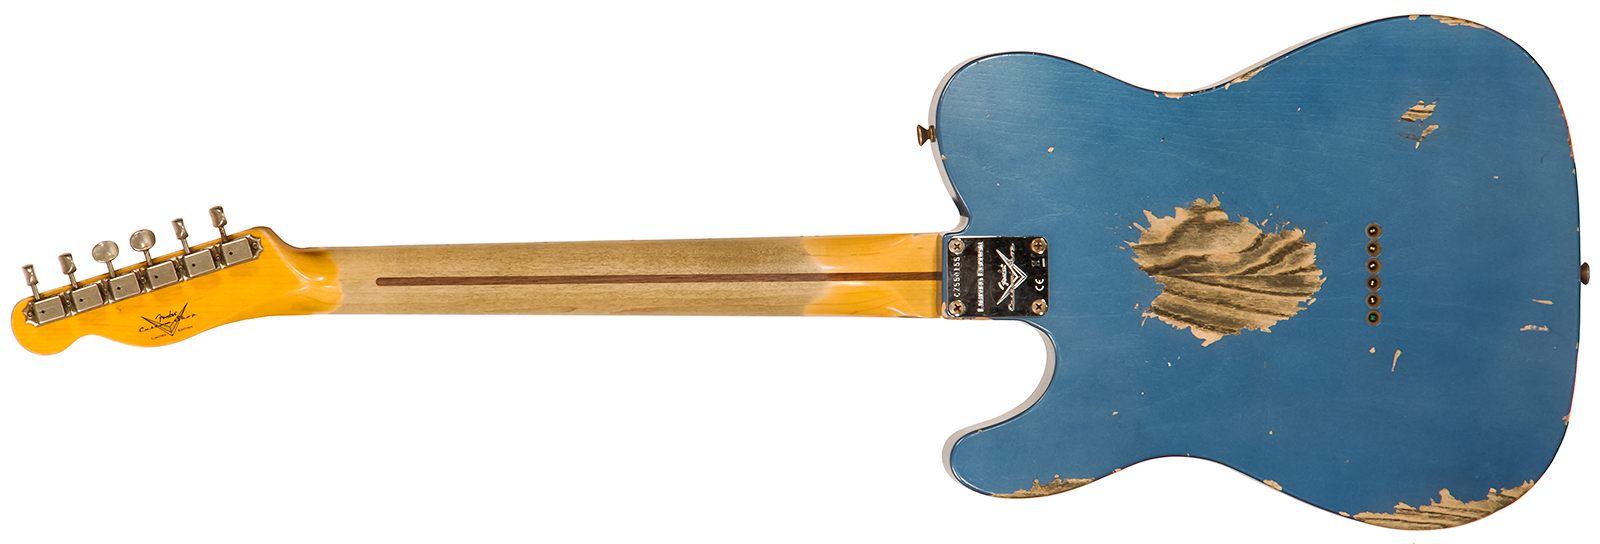 Fender Custom Shop Tele 1958 2s Ht Mn #cz550155 - Heavy Relic Lake Placid Blue - Tel shape electric guitar - Variation 1